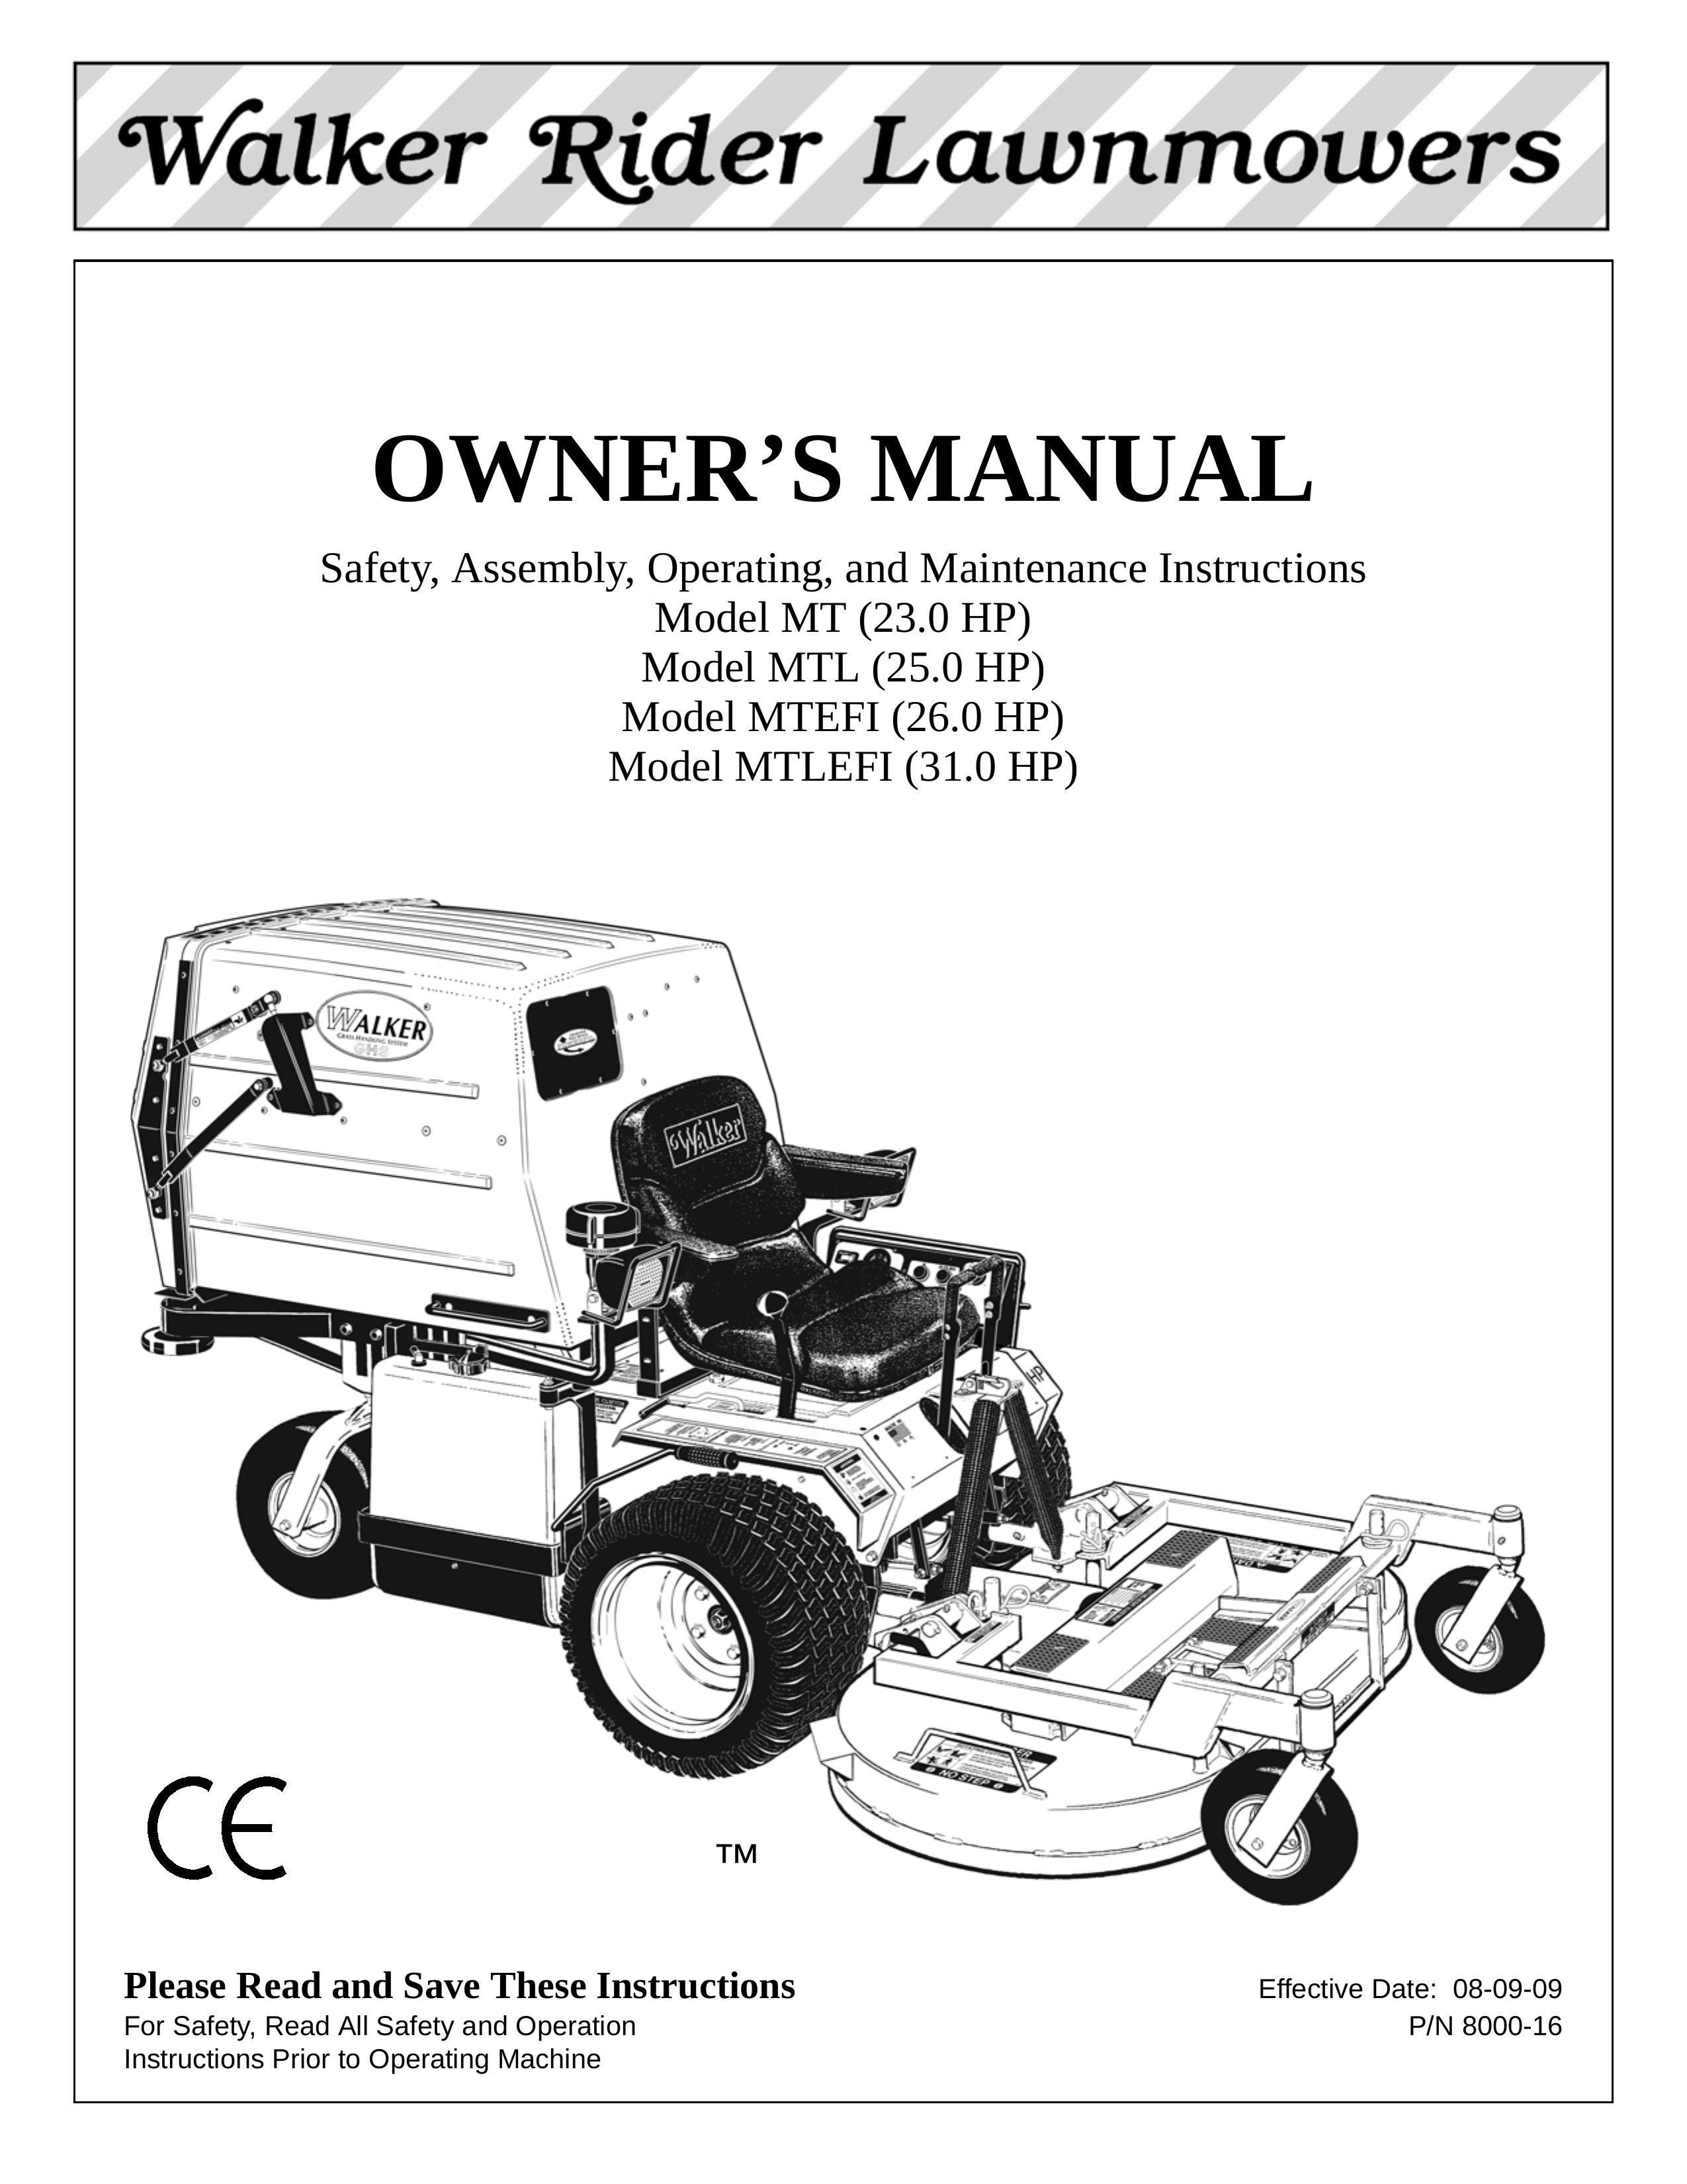 Walker Model MTEFI Lawn Mower User Manual